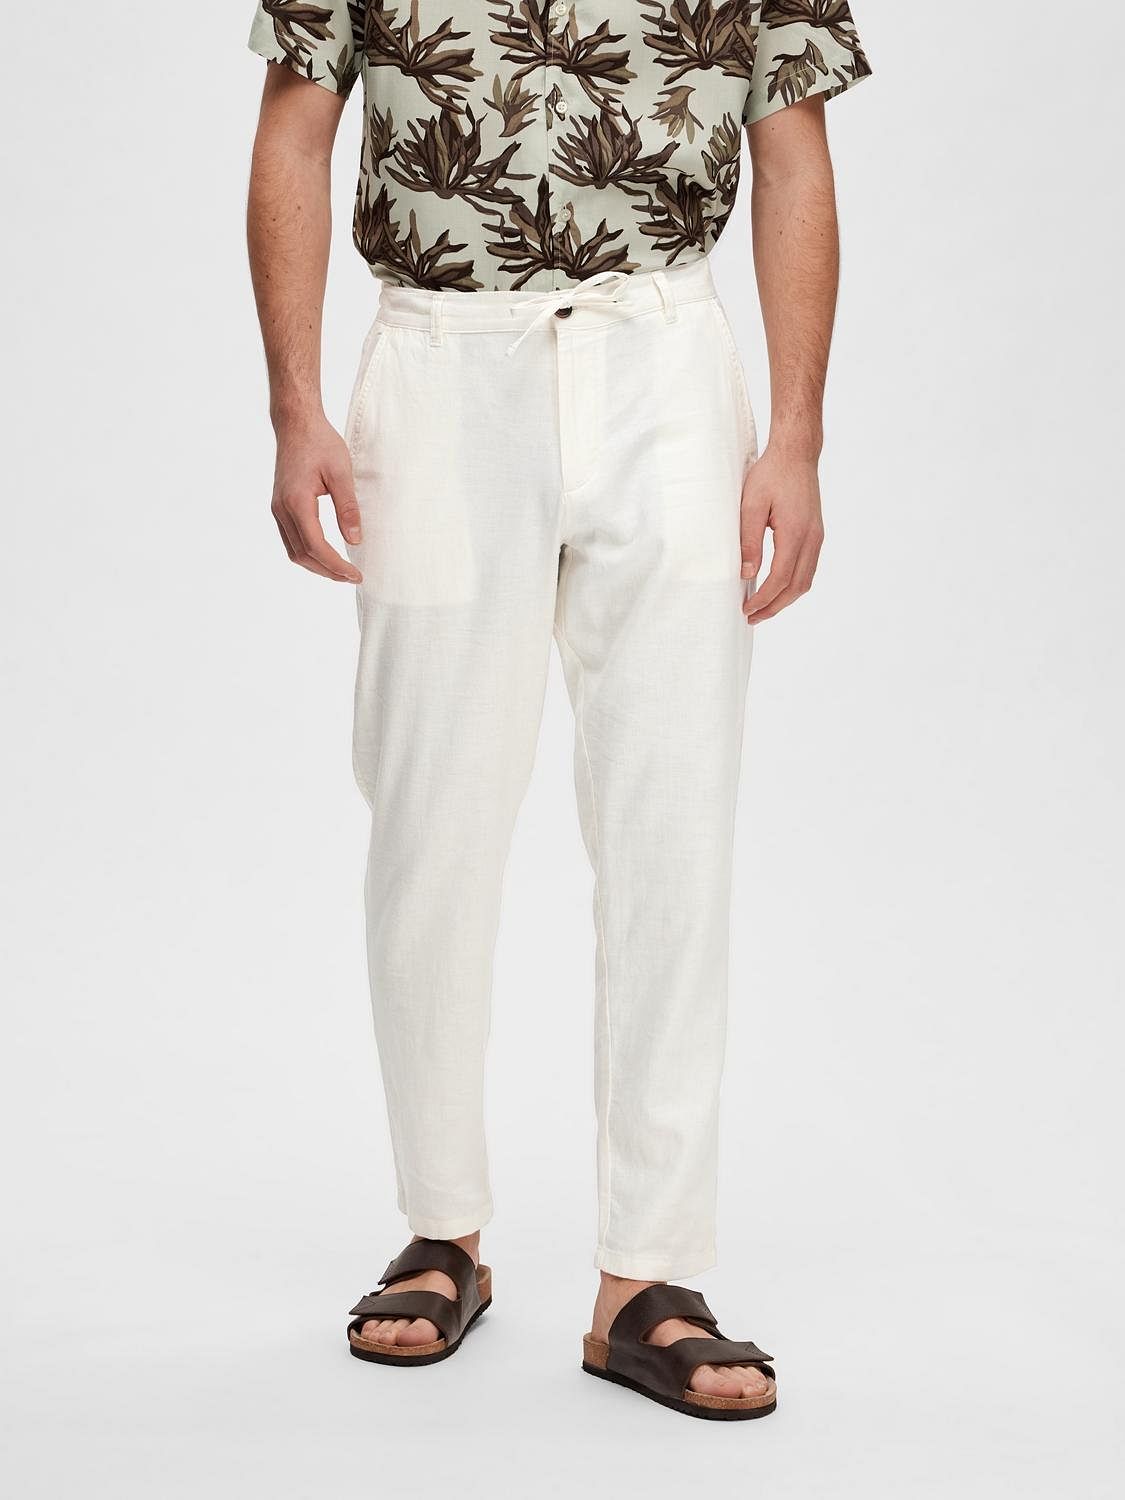 Acne Studios - Linen blend trousers - Cream white